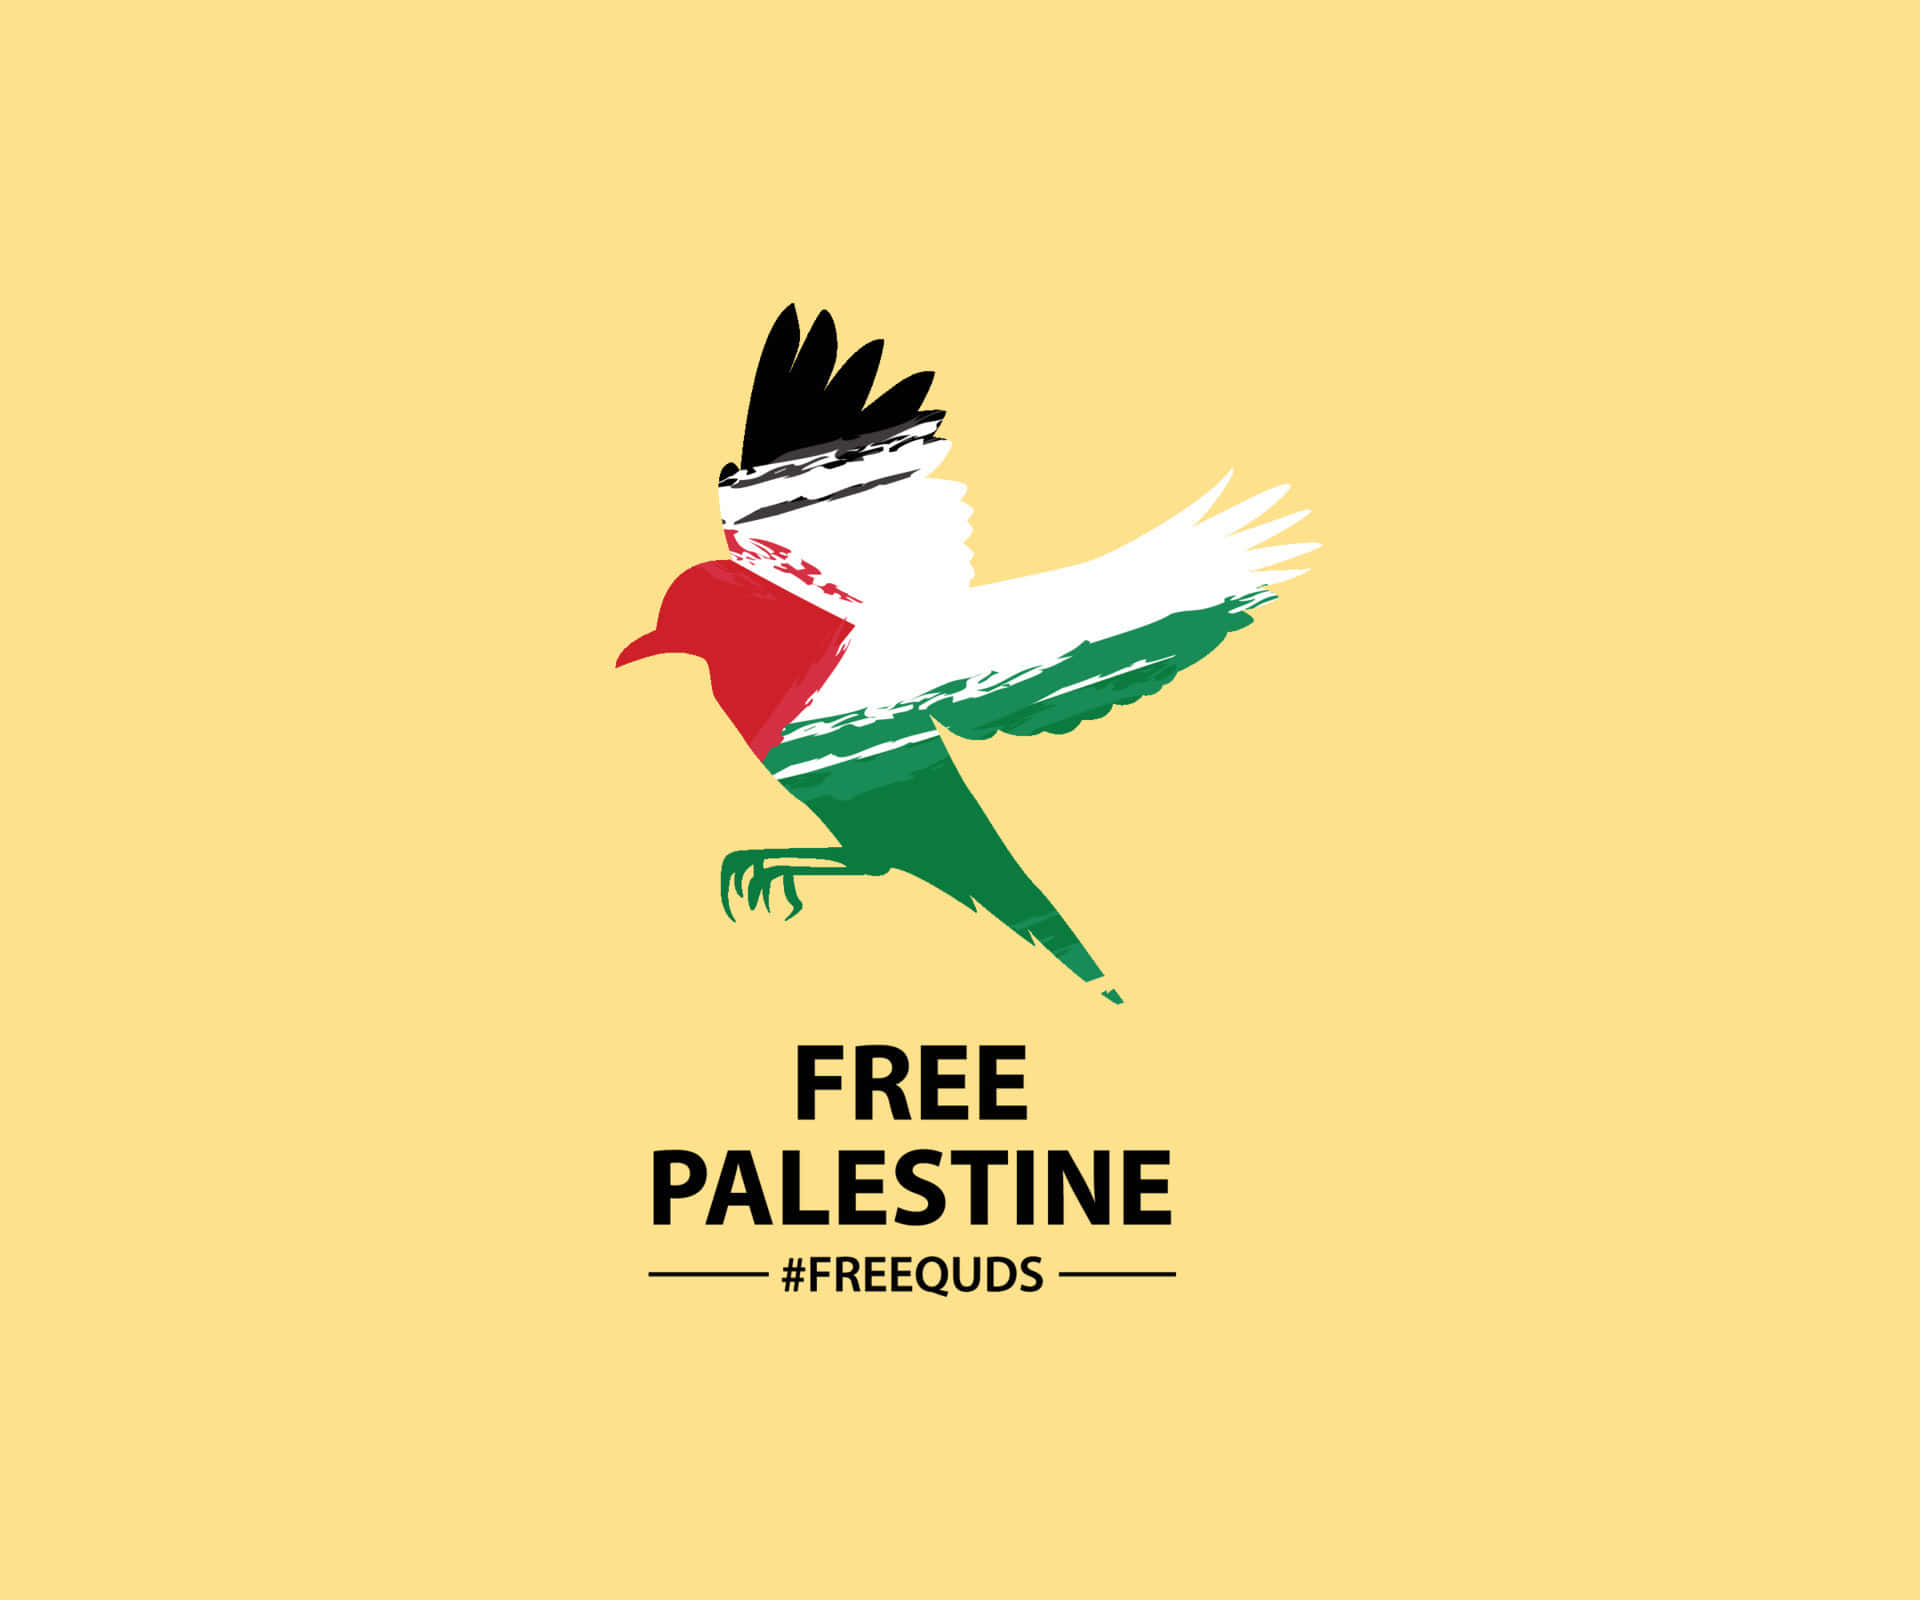 Free Palestine Logo With A Bird Flying